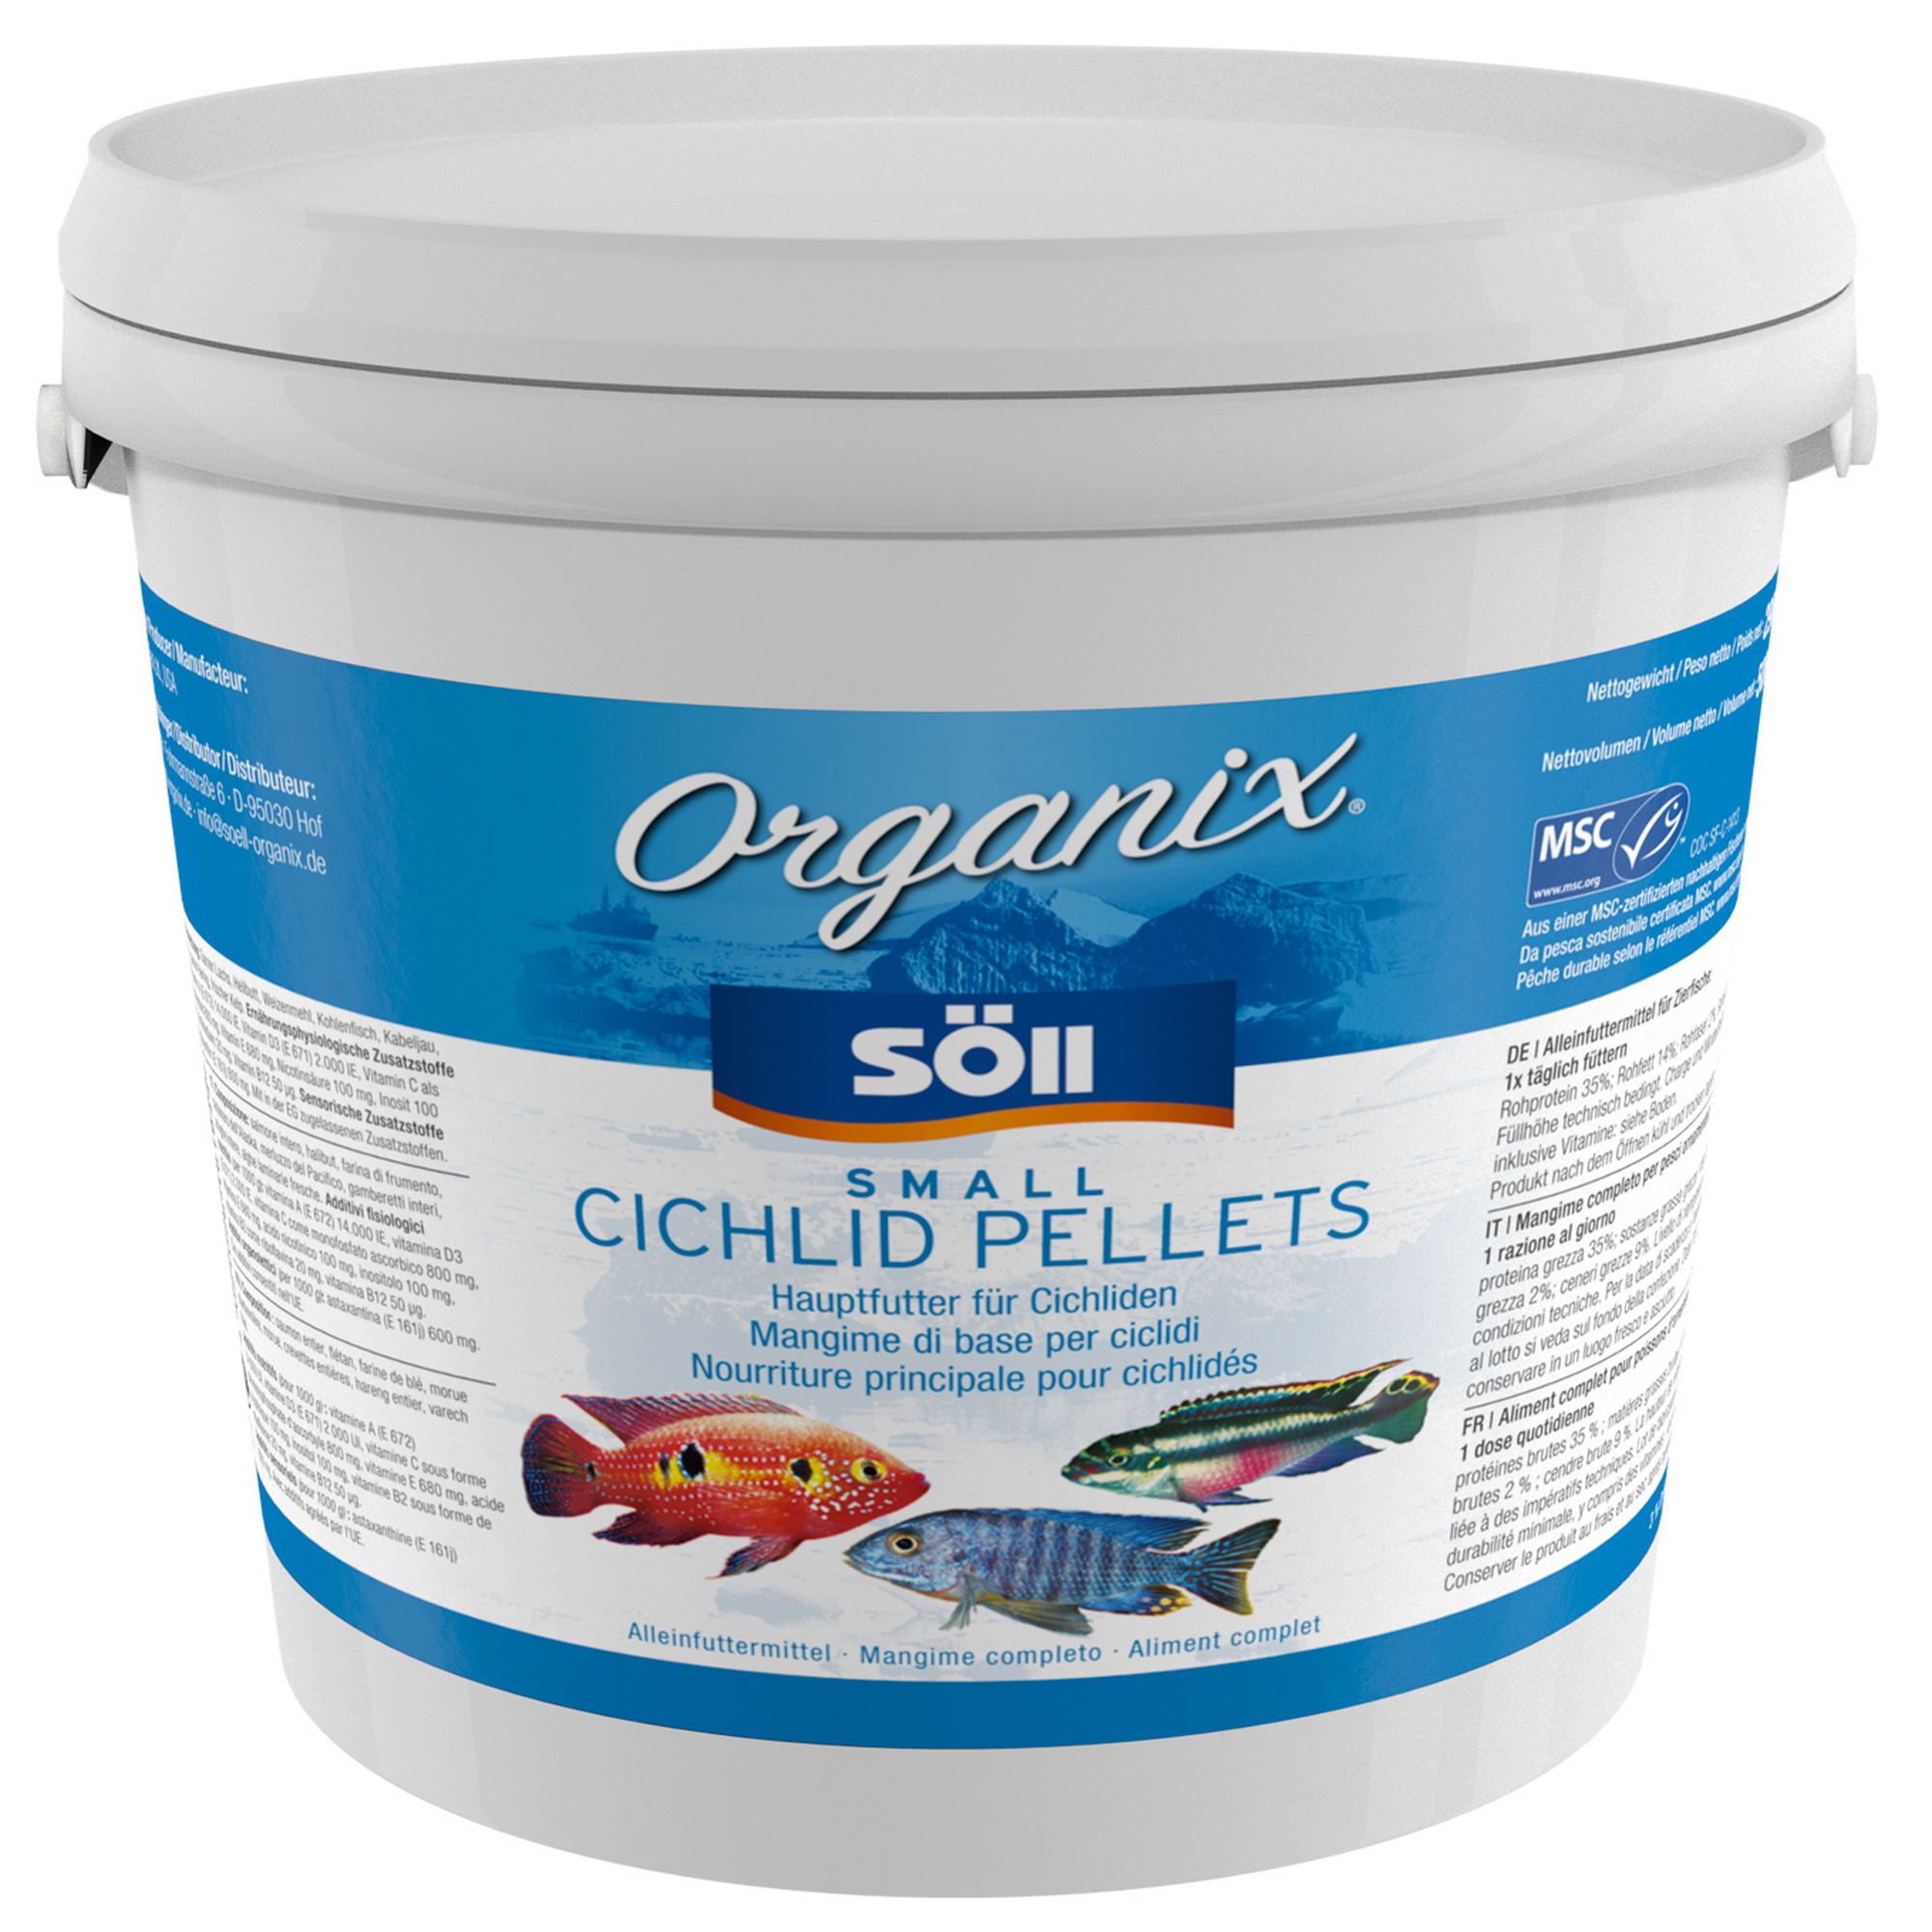 Organix Small Cichlid Pellets 5 l + product picture